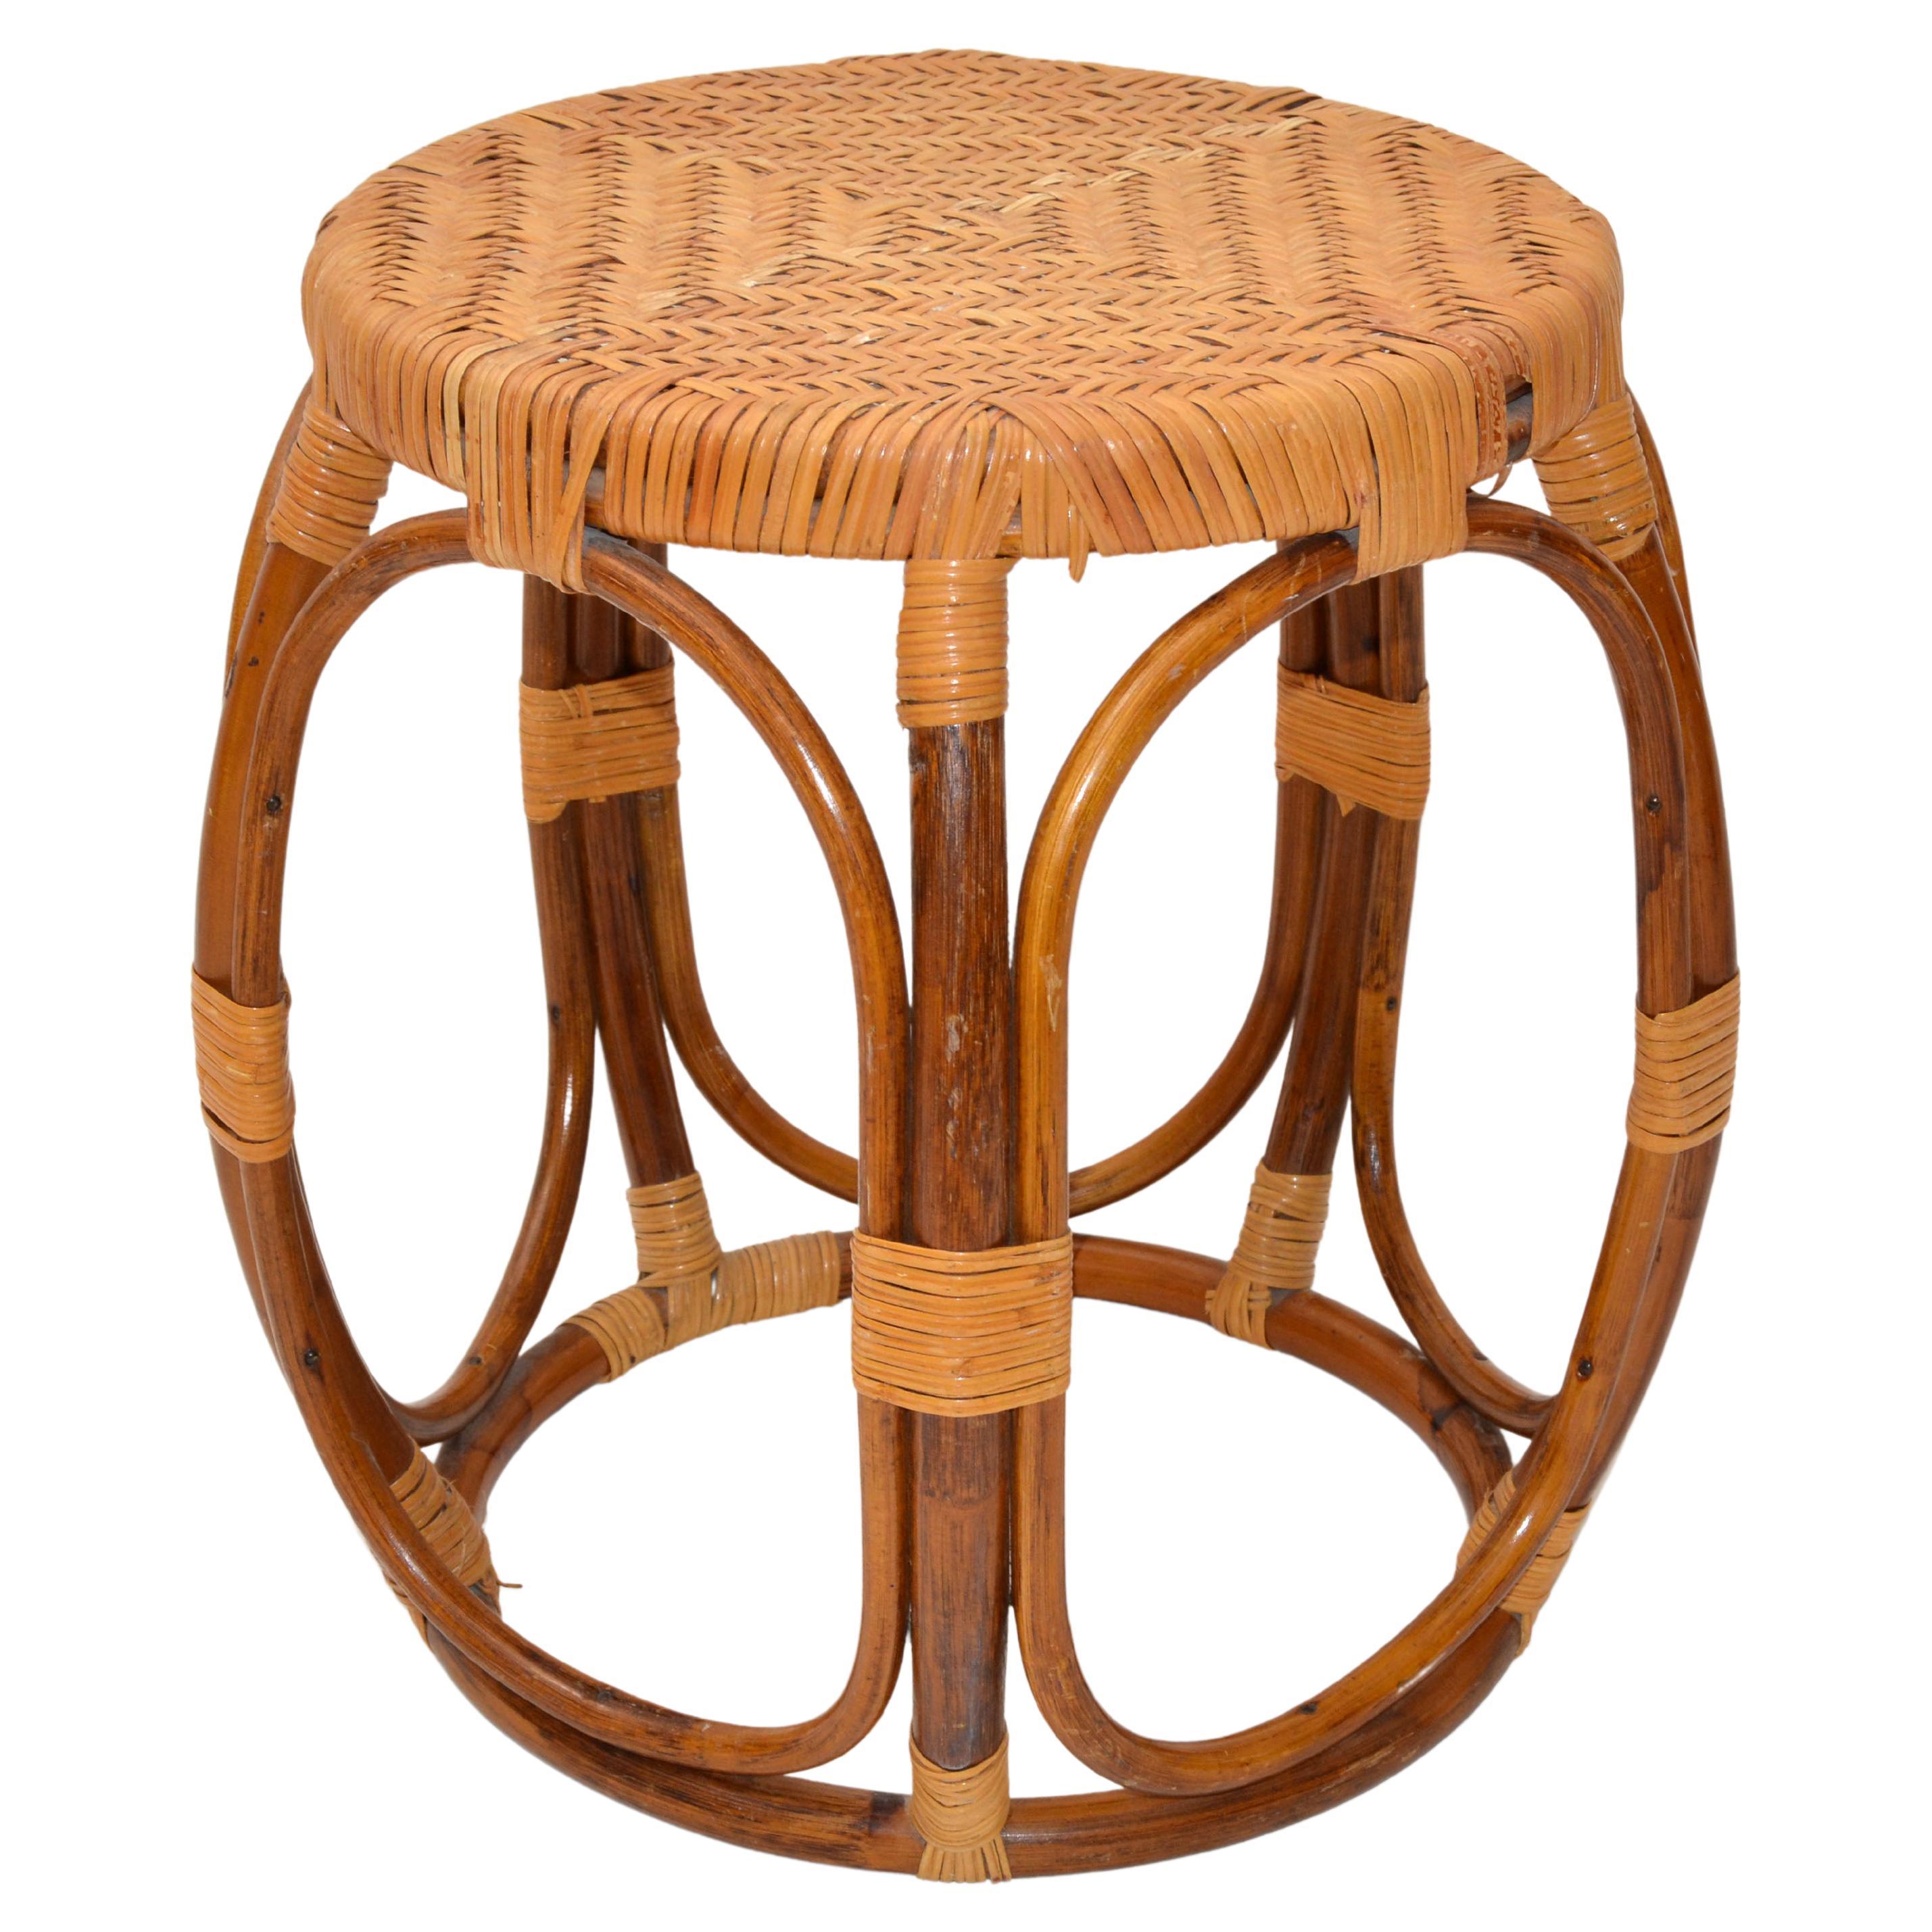 Vintage Midcentury Round Handwoven Rattan / Wicker Drum, Side, Drink Table Stool